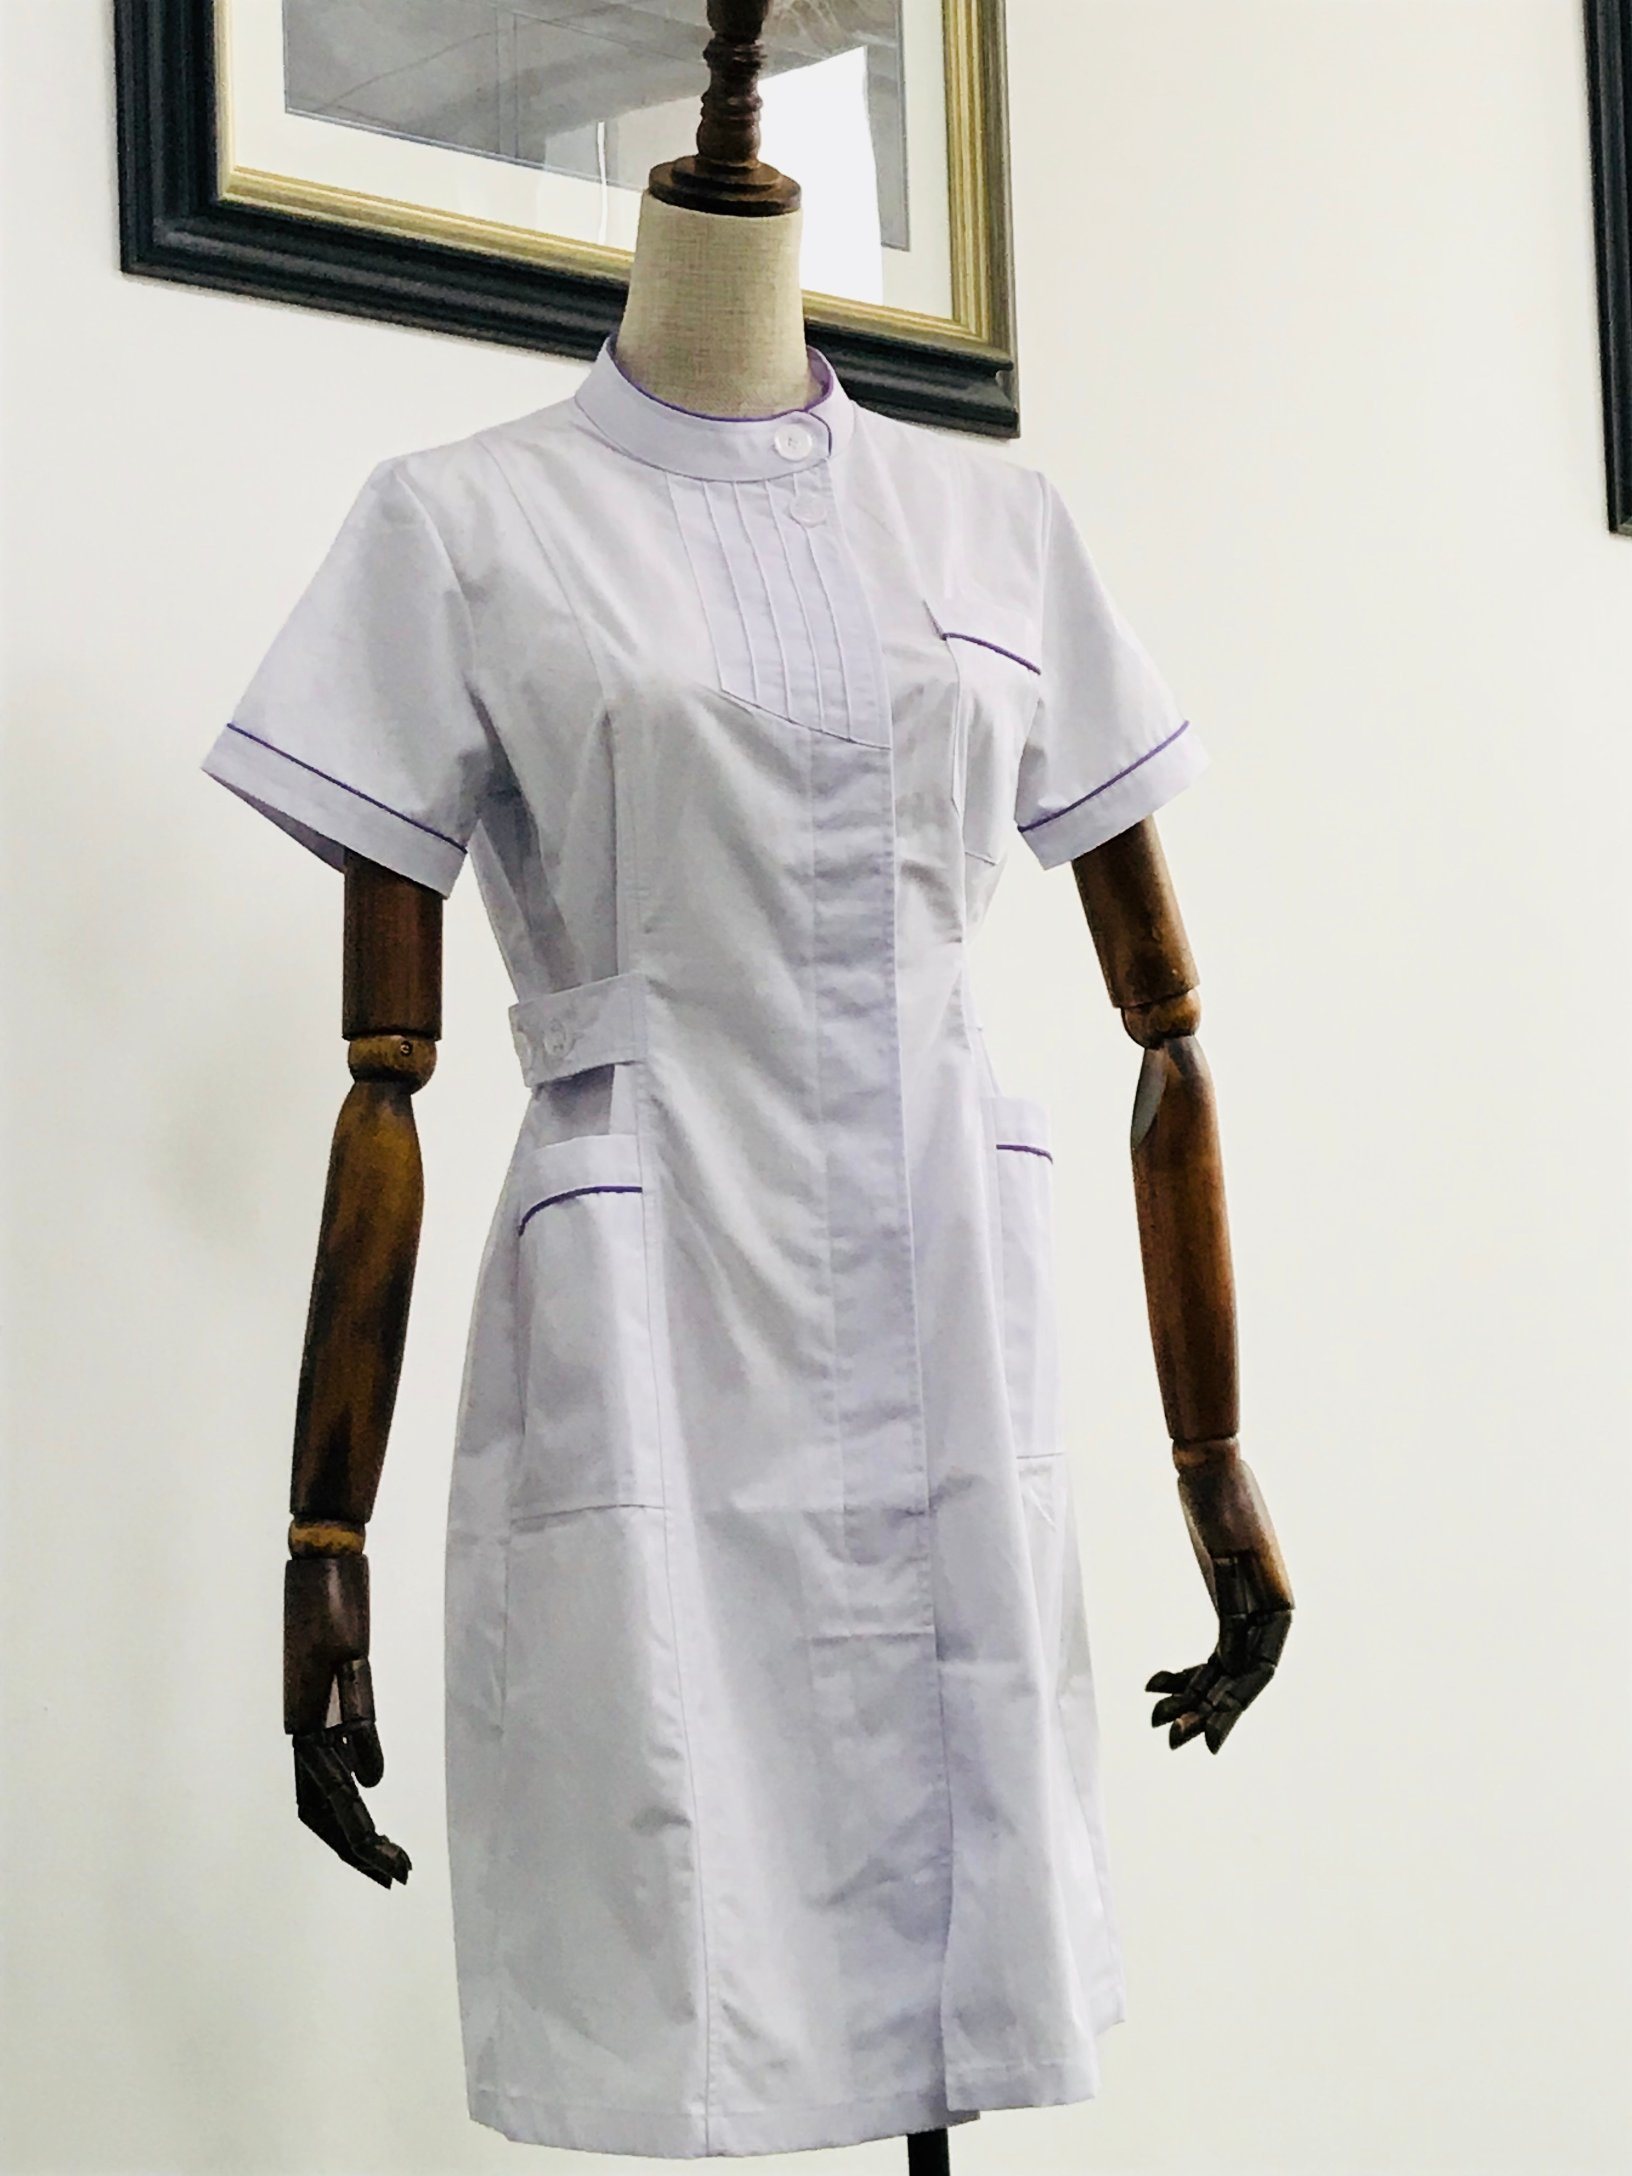 Hot Sale Nurse Uniform for Hospital